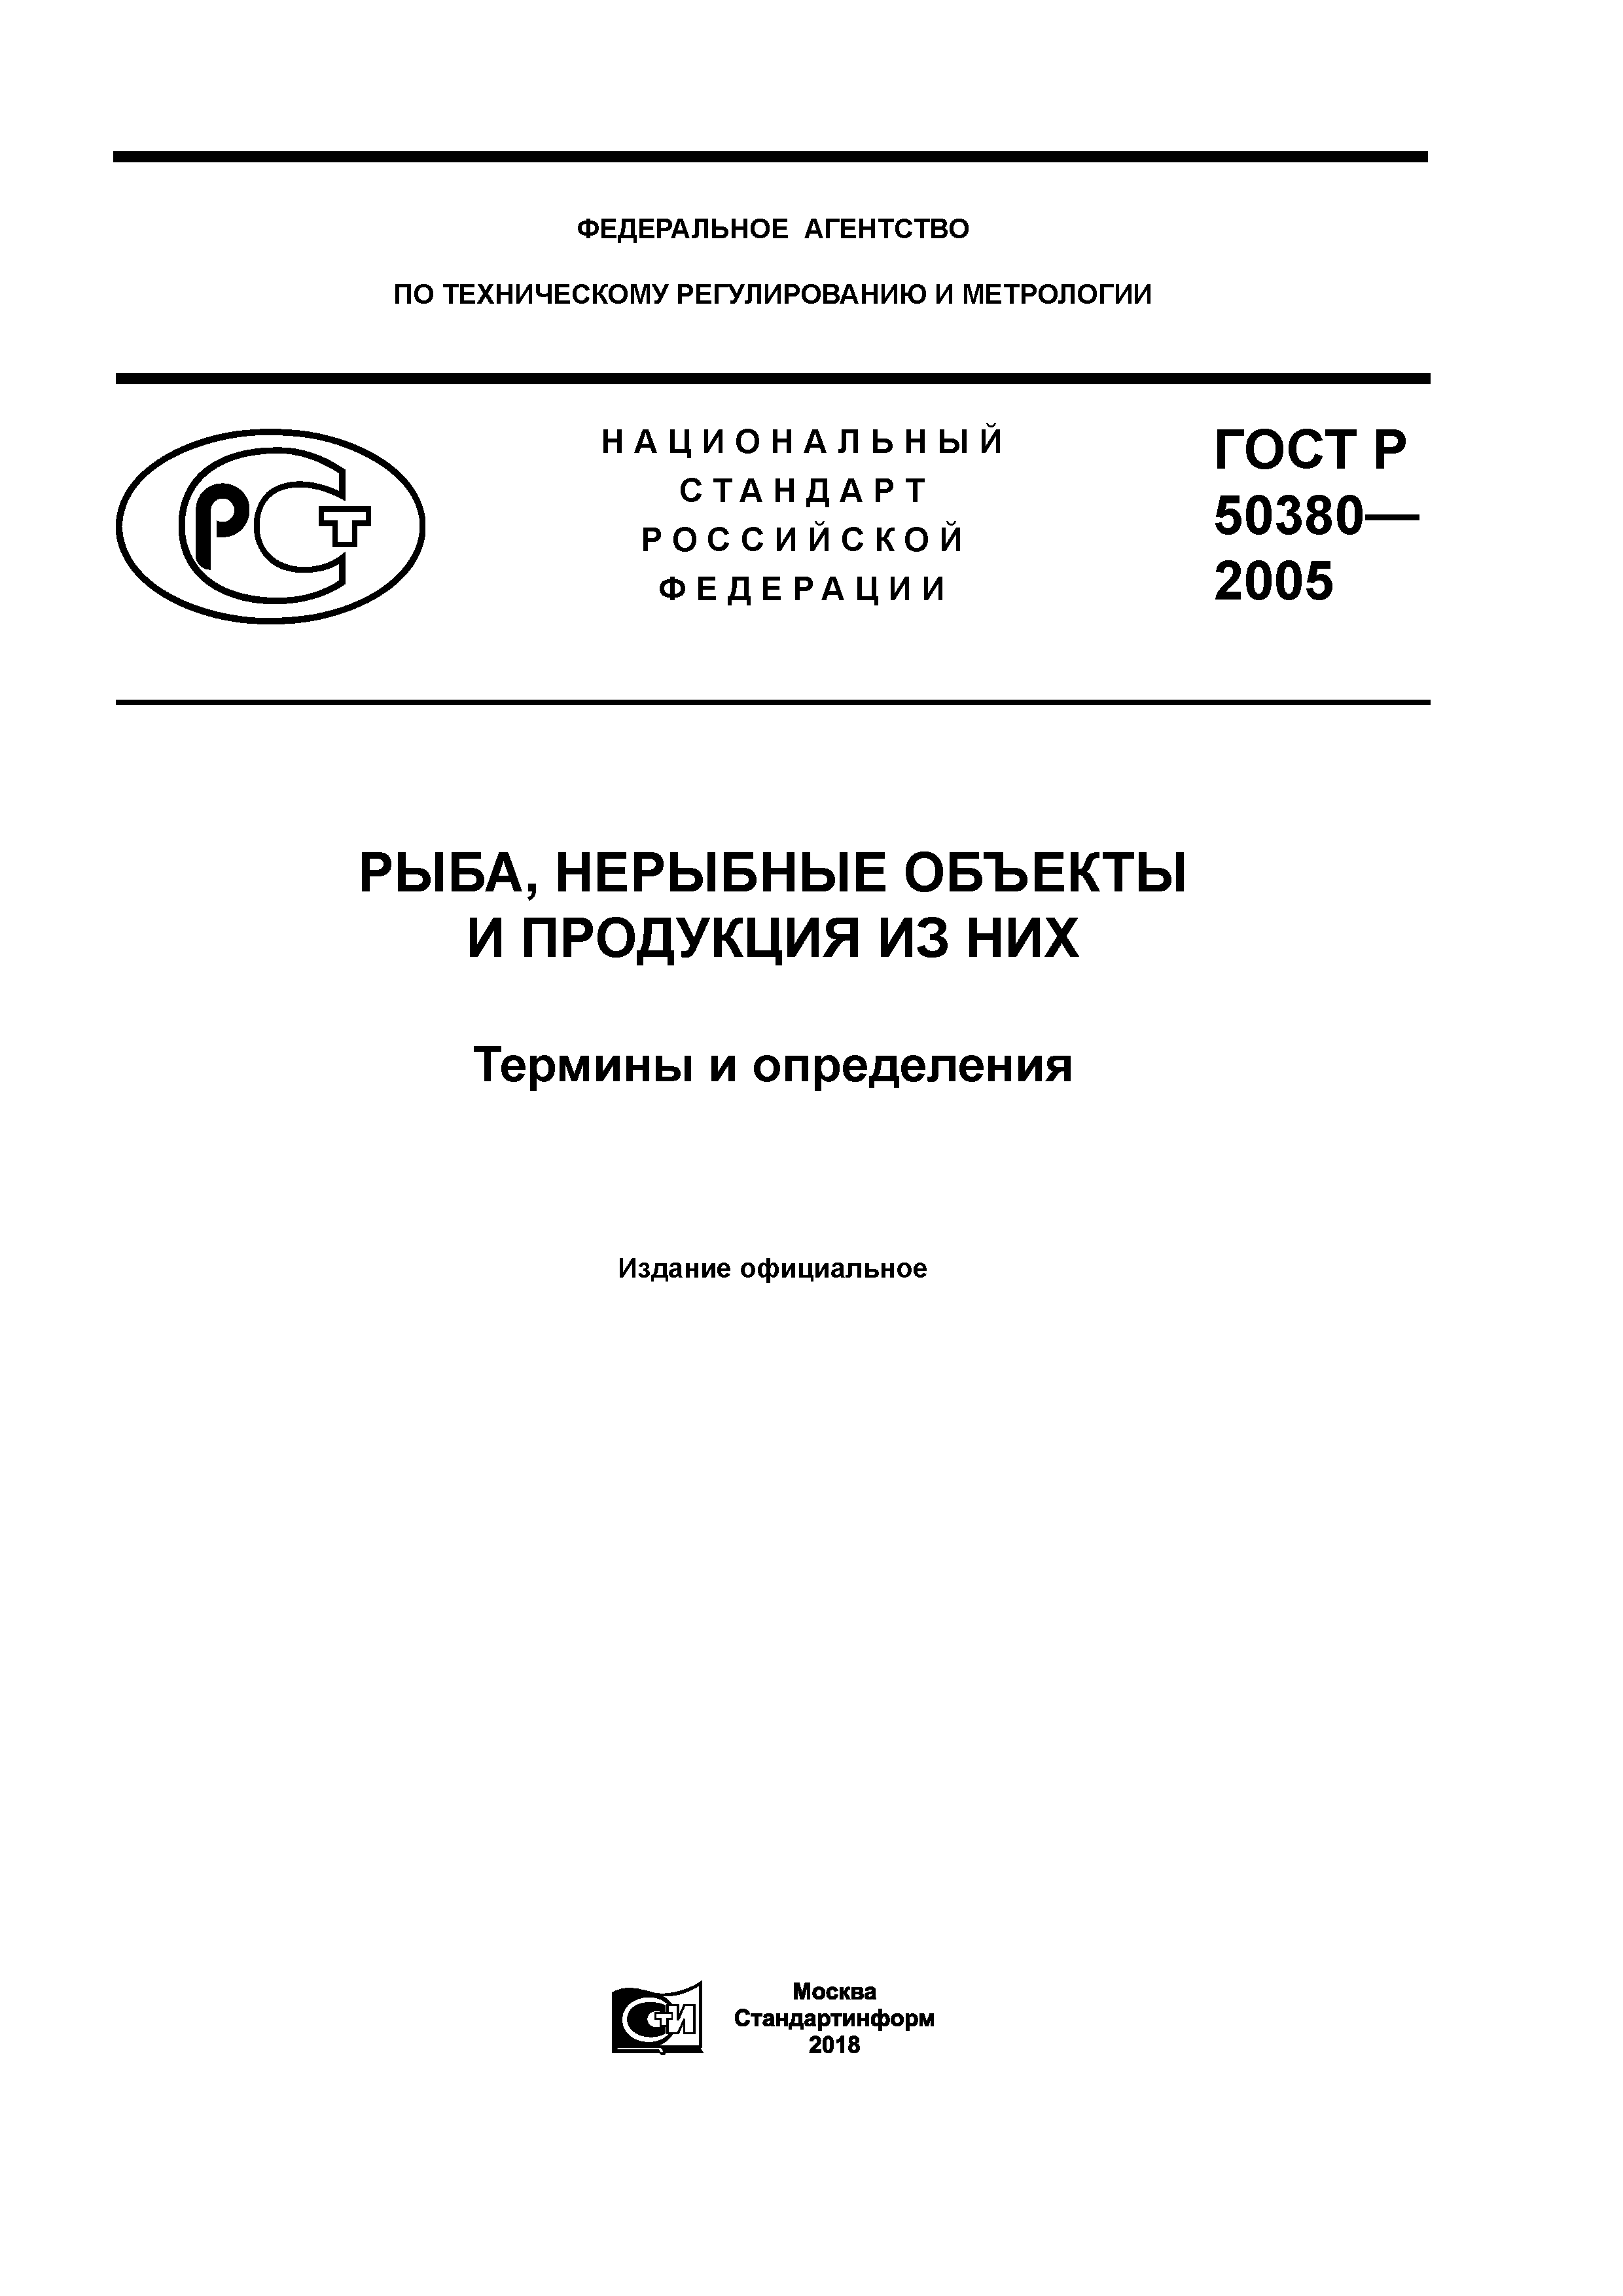 ГОСТ Р 50380-2005